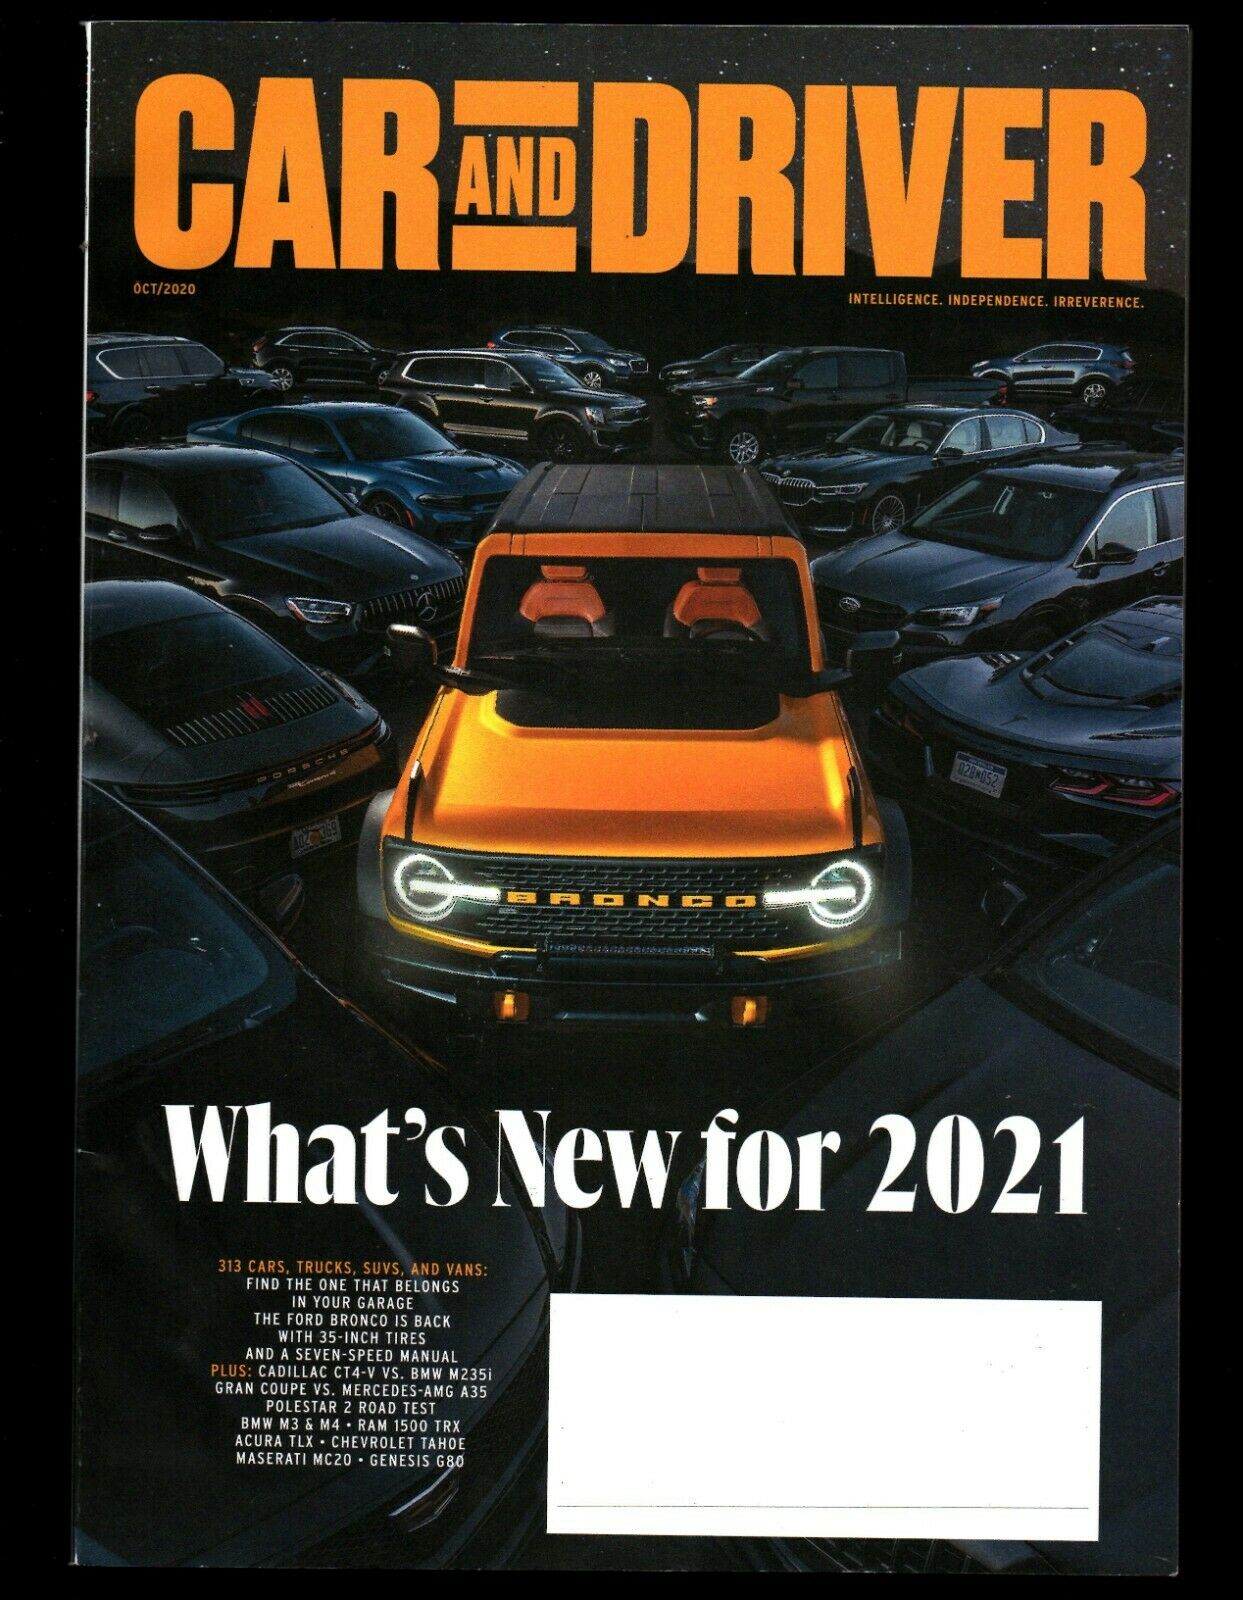 Car & Driver October 2020 magazine back issue Car & Driver magizine back copy 